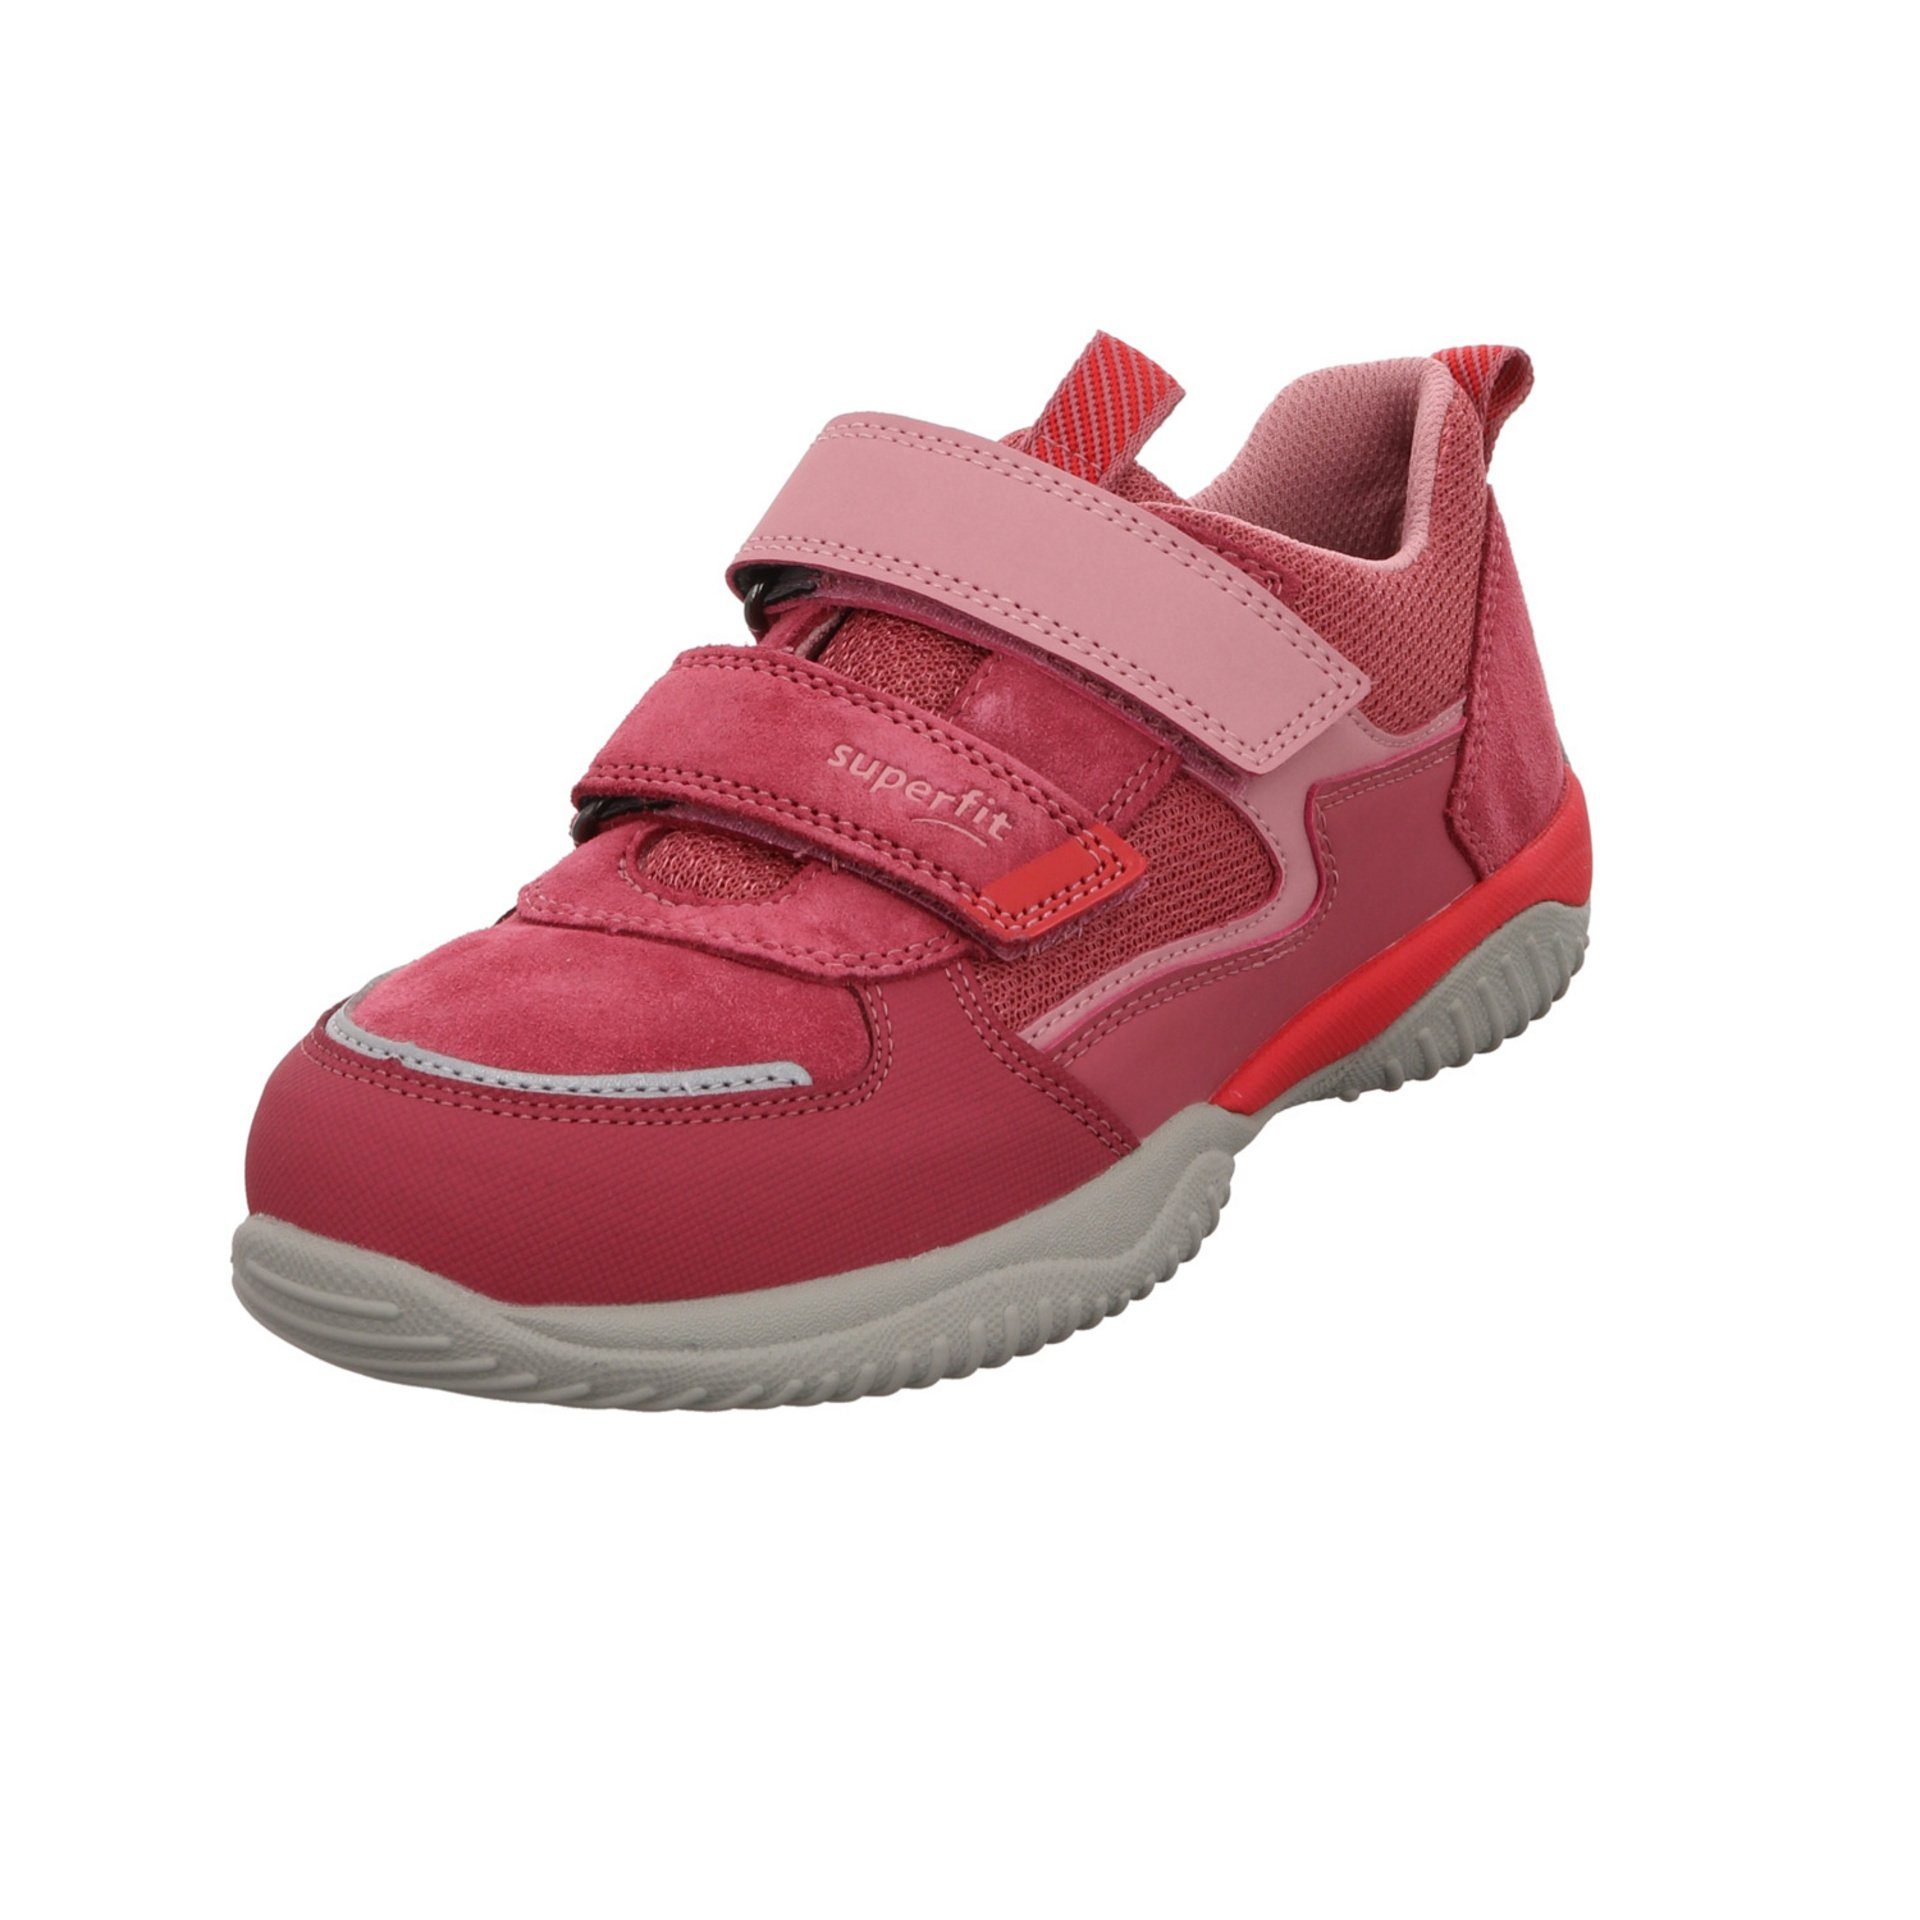 Superfit Jungen Schnürhalbschuhe Storm Klettschuh Schnürschuh Leder-/Textilkombination rot pink | Sneaker